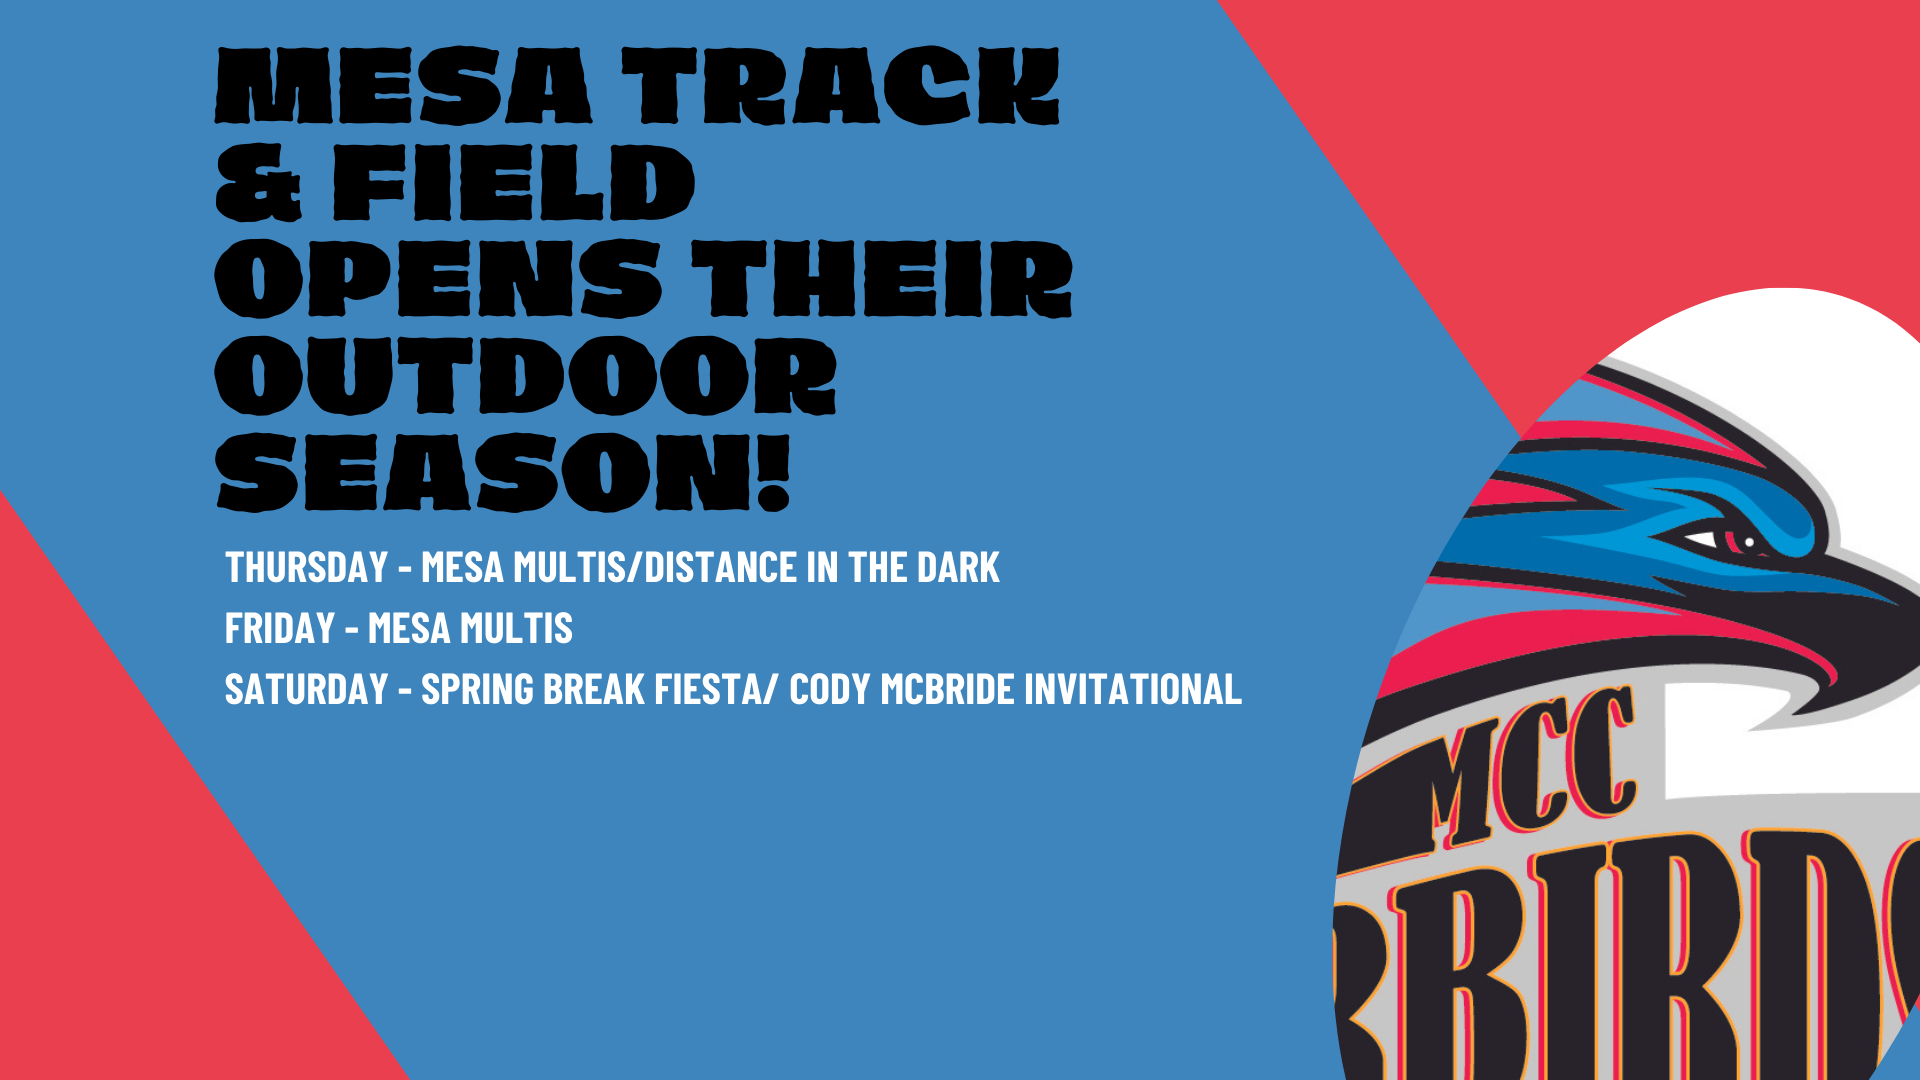 Mesa Track & Field looks forward to their outdoor season